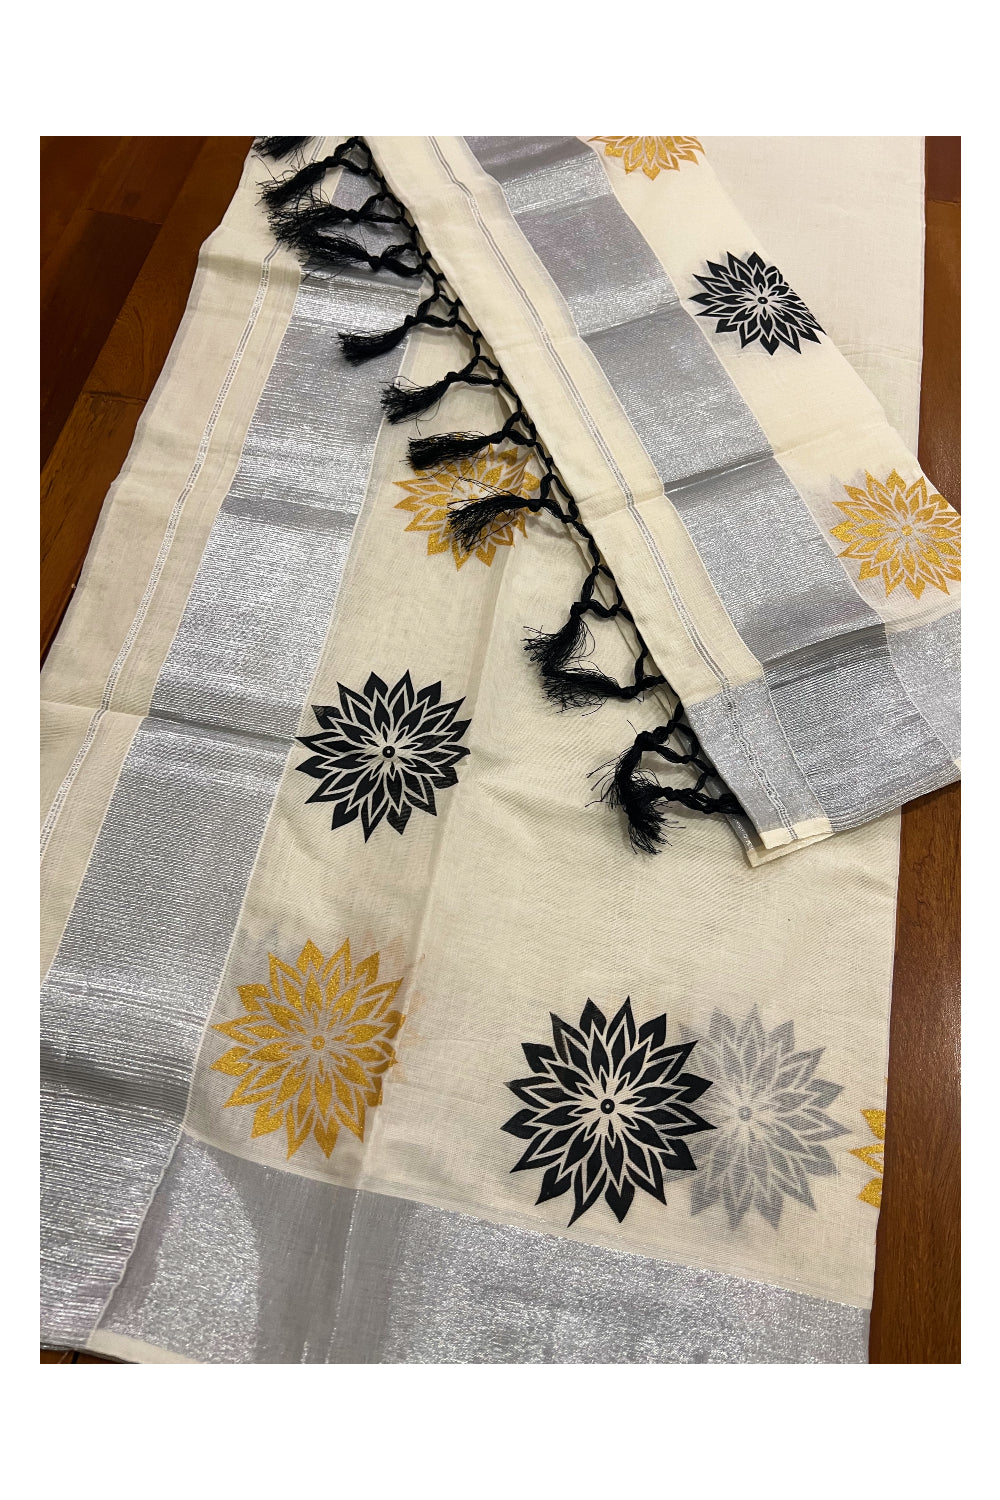 Kerala Cotton Mundum Neriyathum Single (Set Mundu) with Black and Golden Floral Block Prints